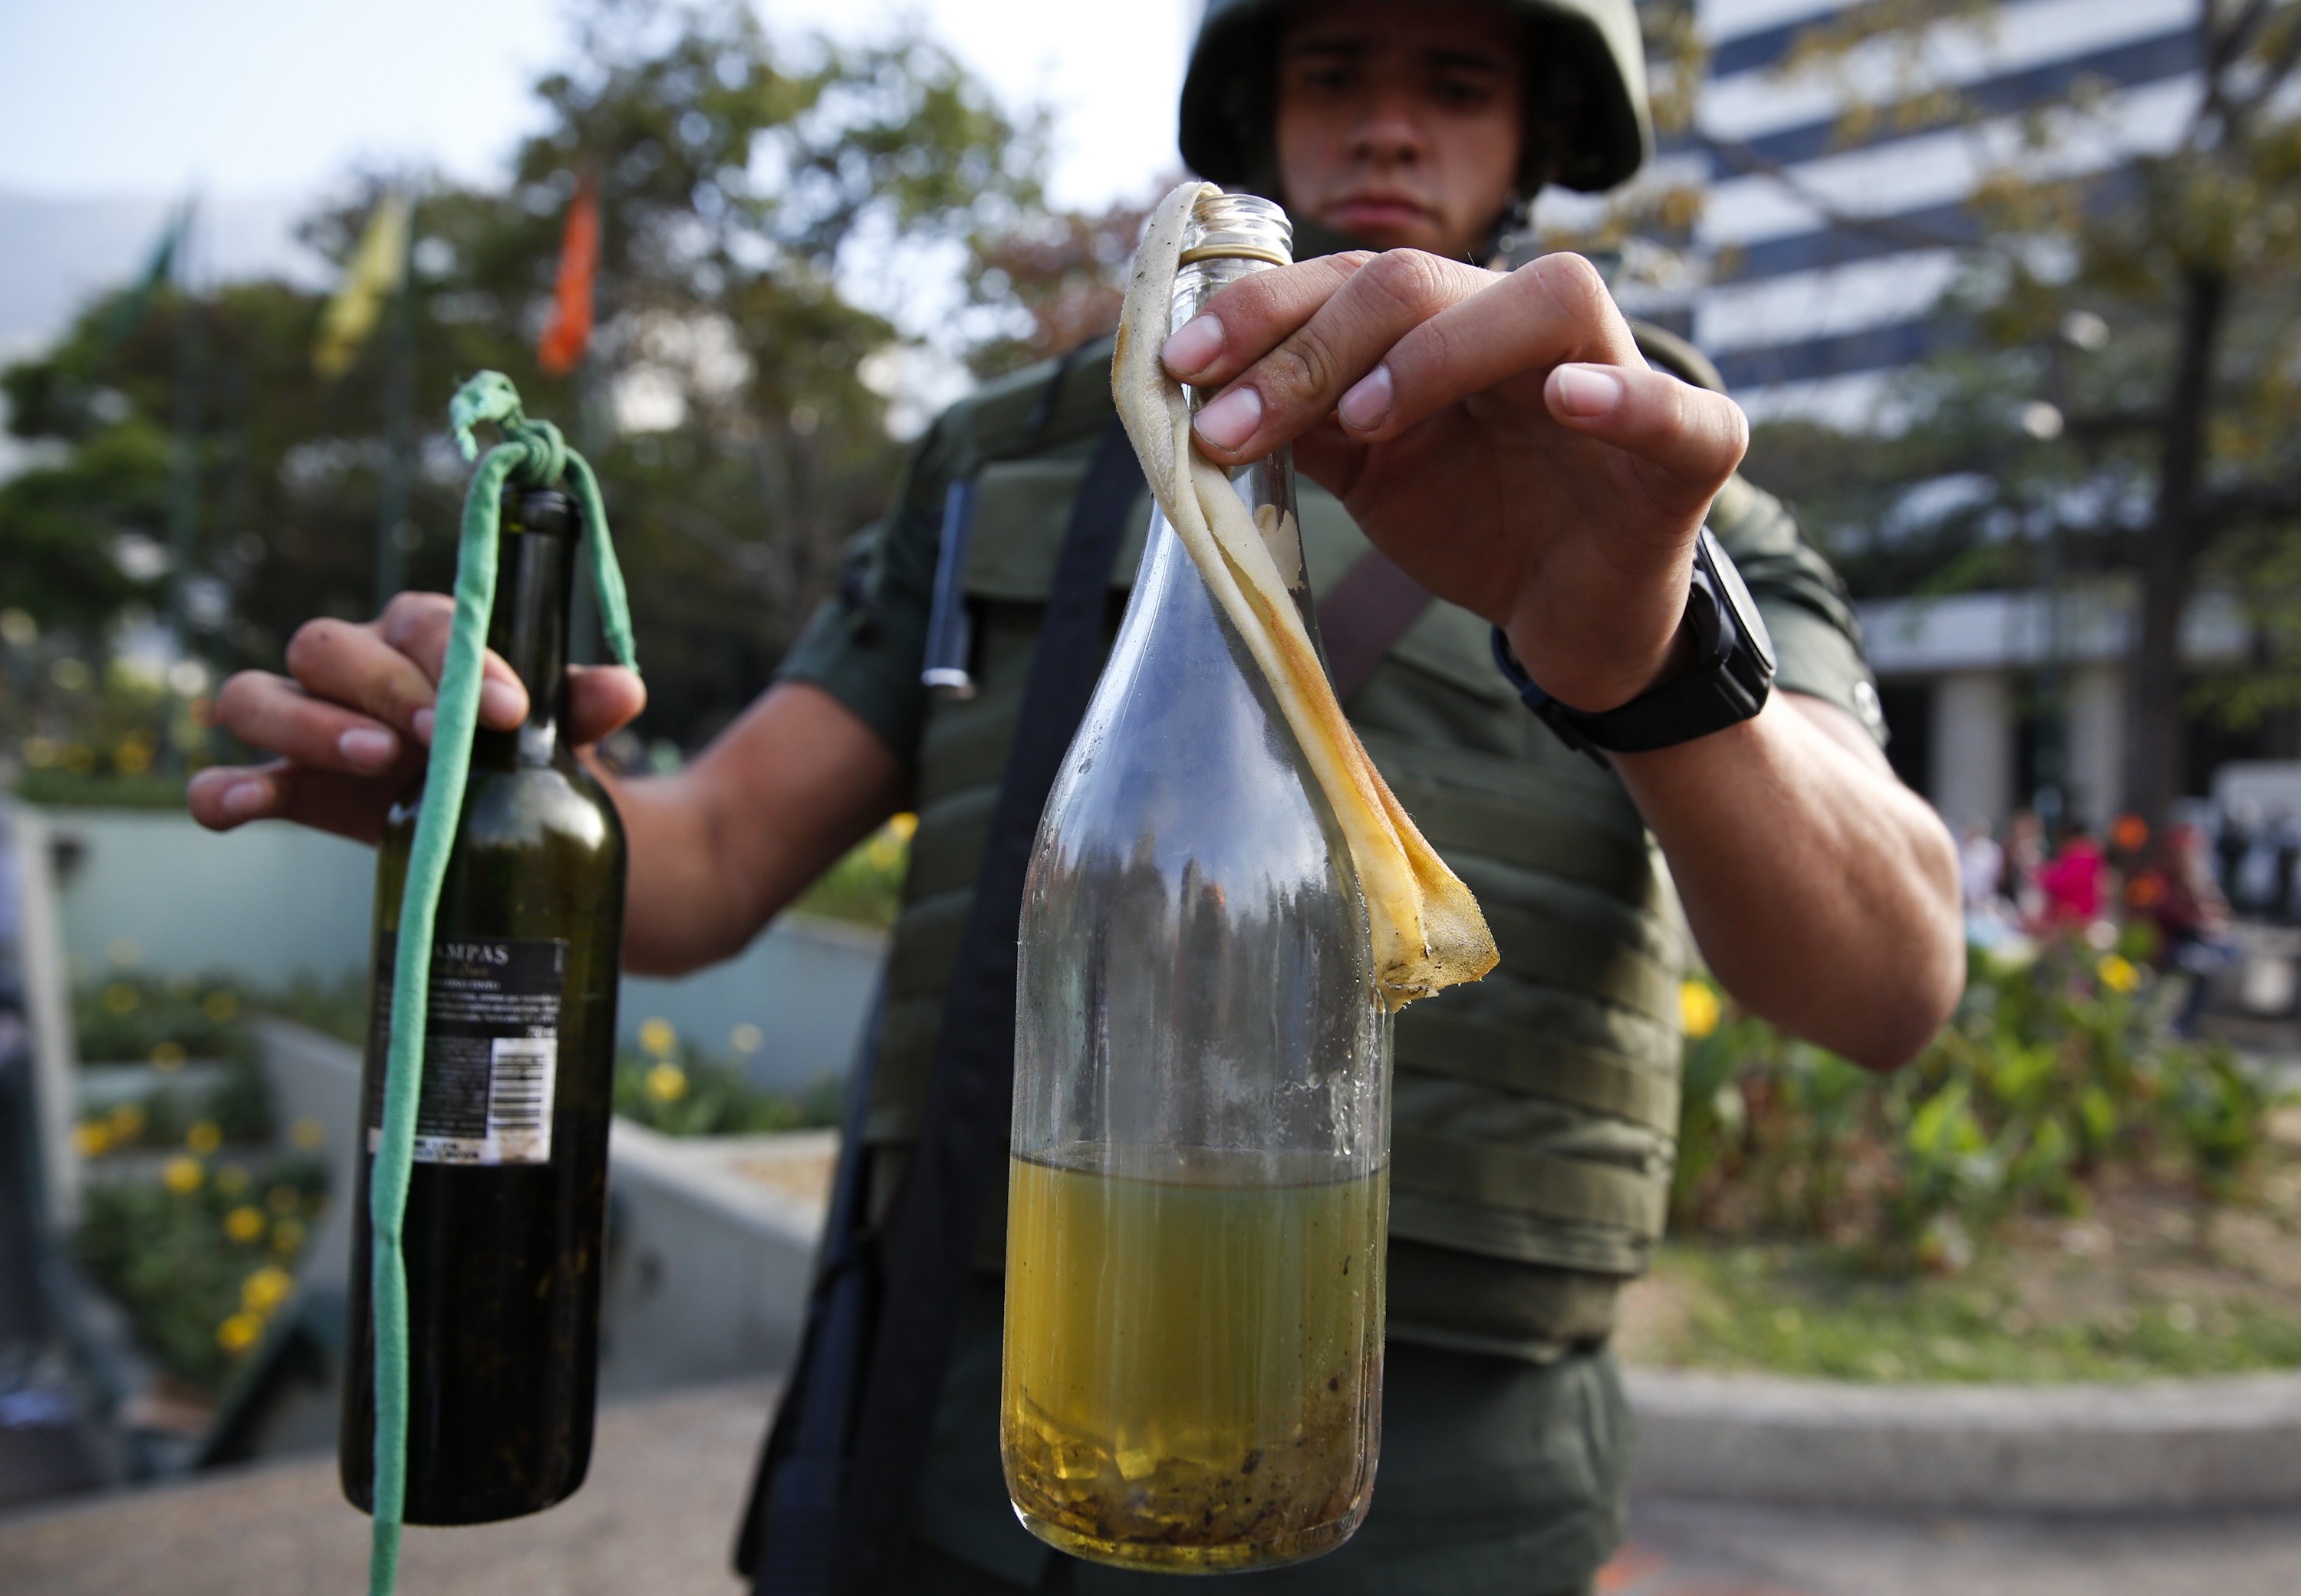 Militares decomisan “potentes” armas de manifestantes en Altamira (Fotos)